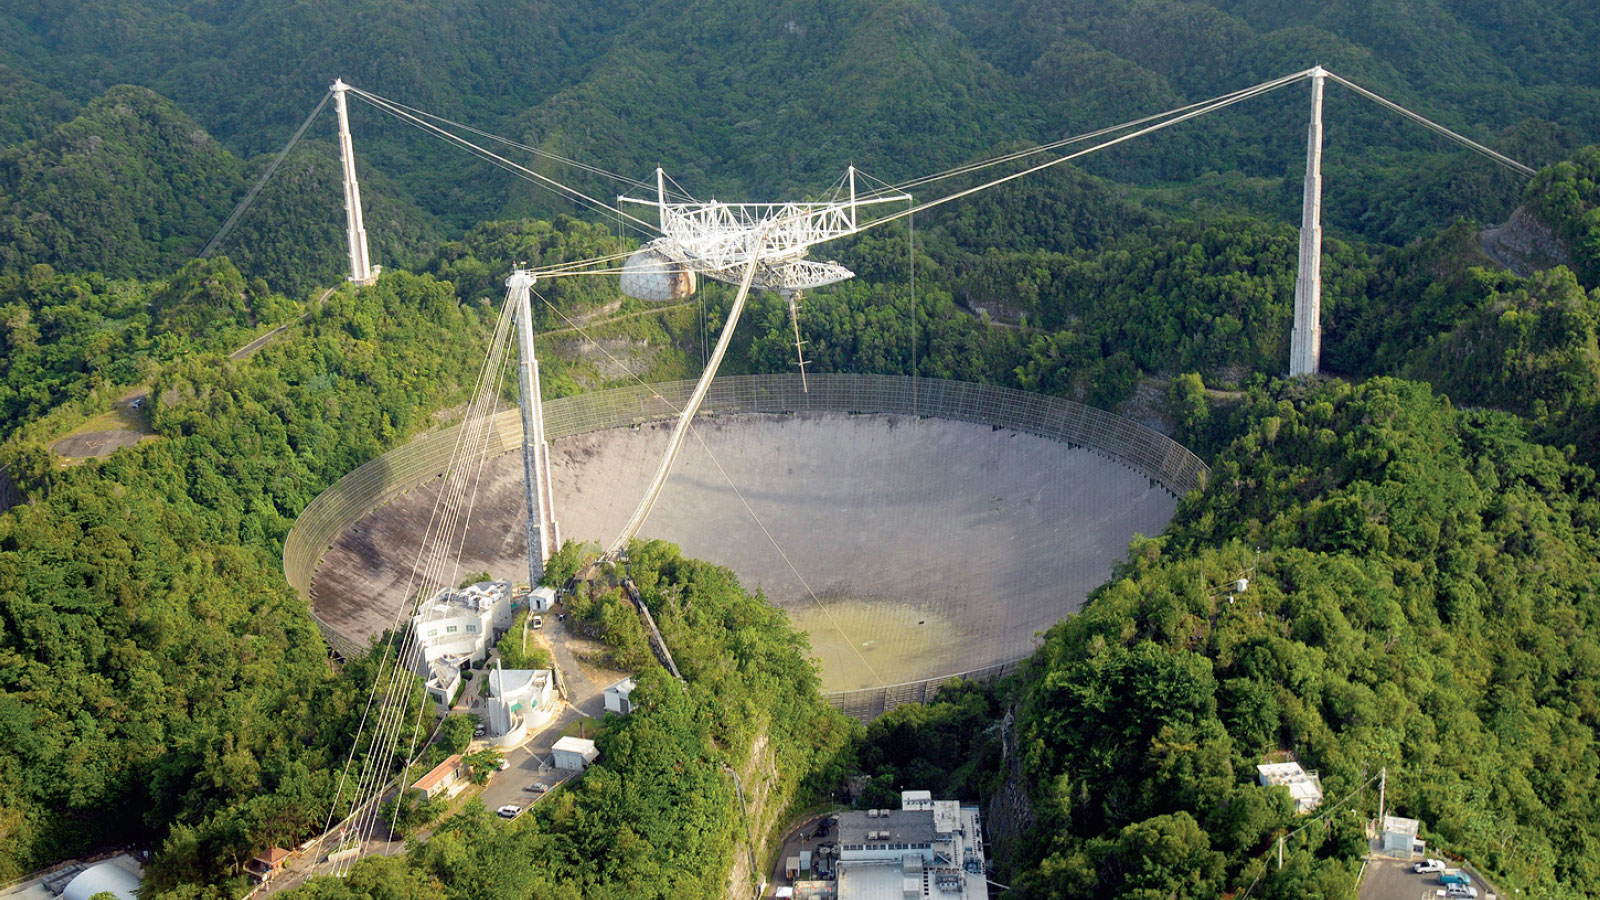 NRAO and GBO Saddened at Loss of Arecibo Telescope